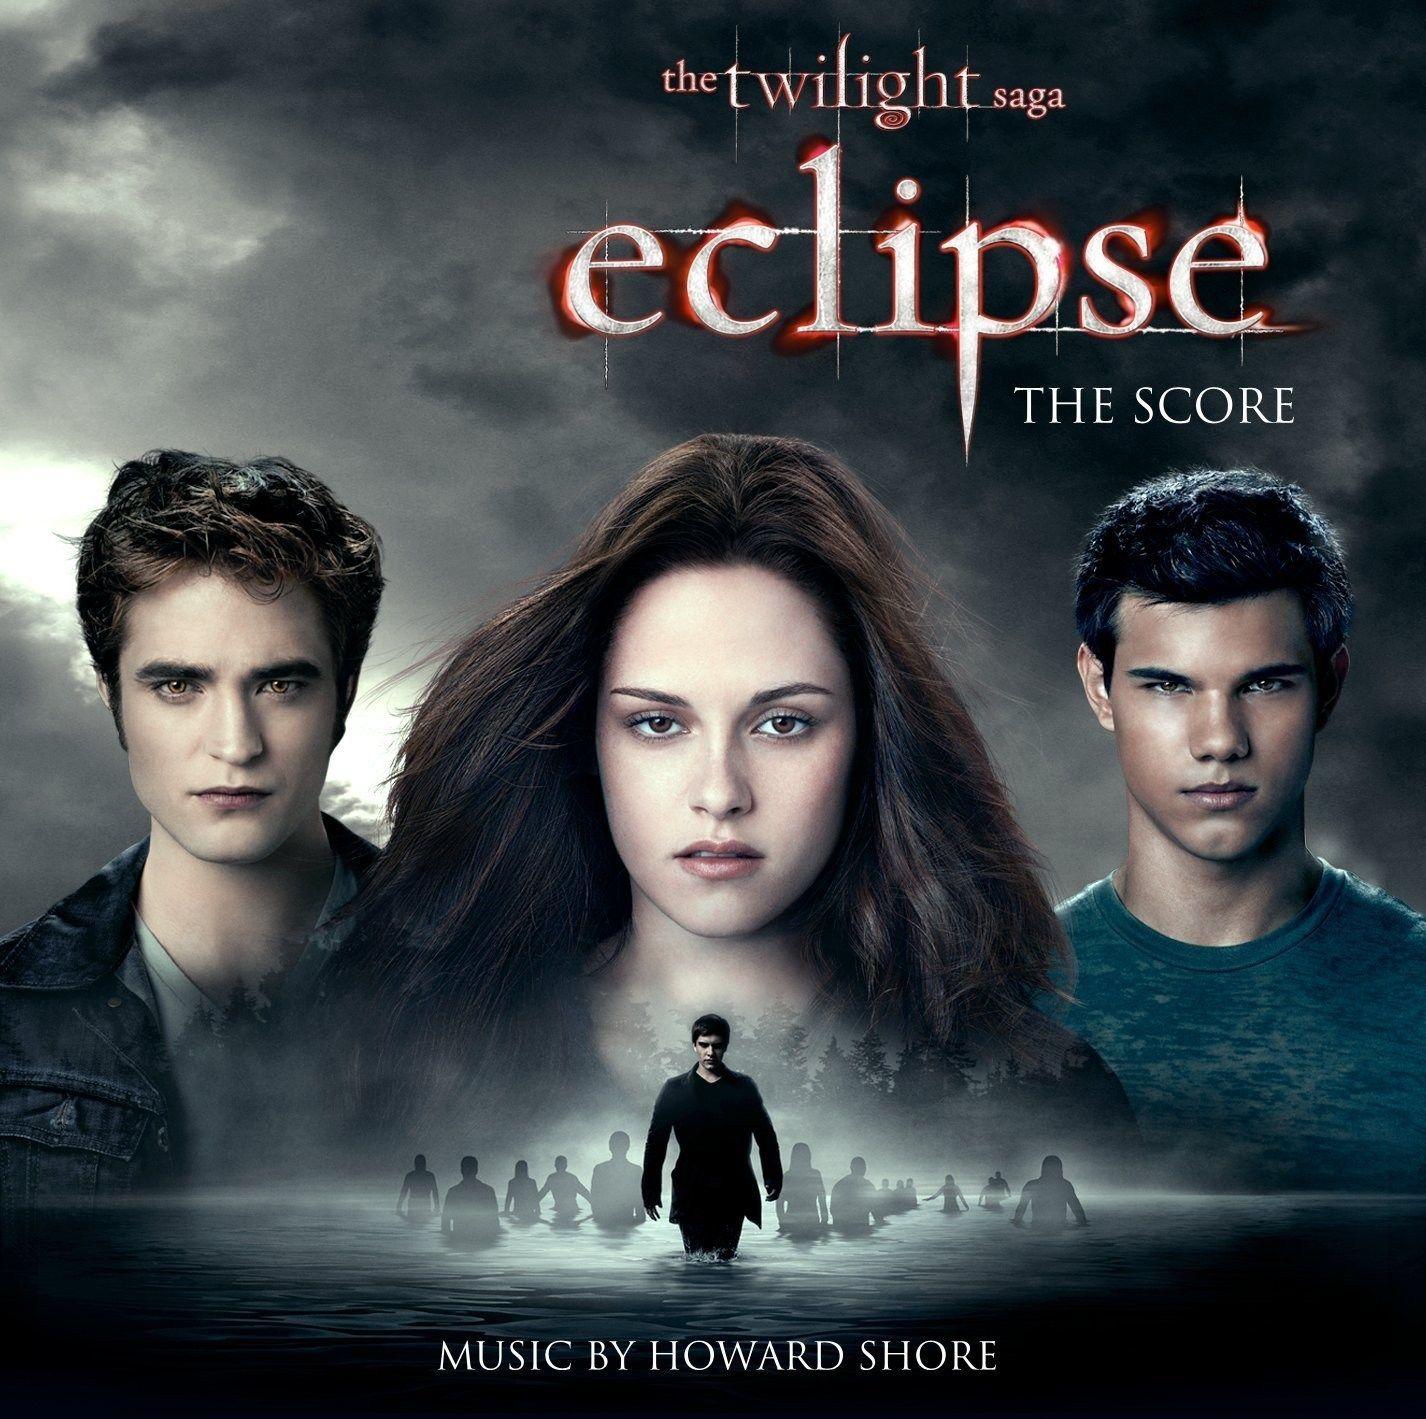 Twilight Saga Movie Soundtracks image The Twilight Saga: Eclipse